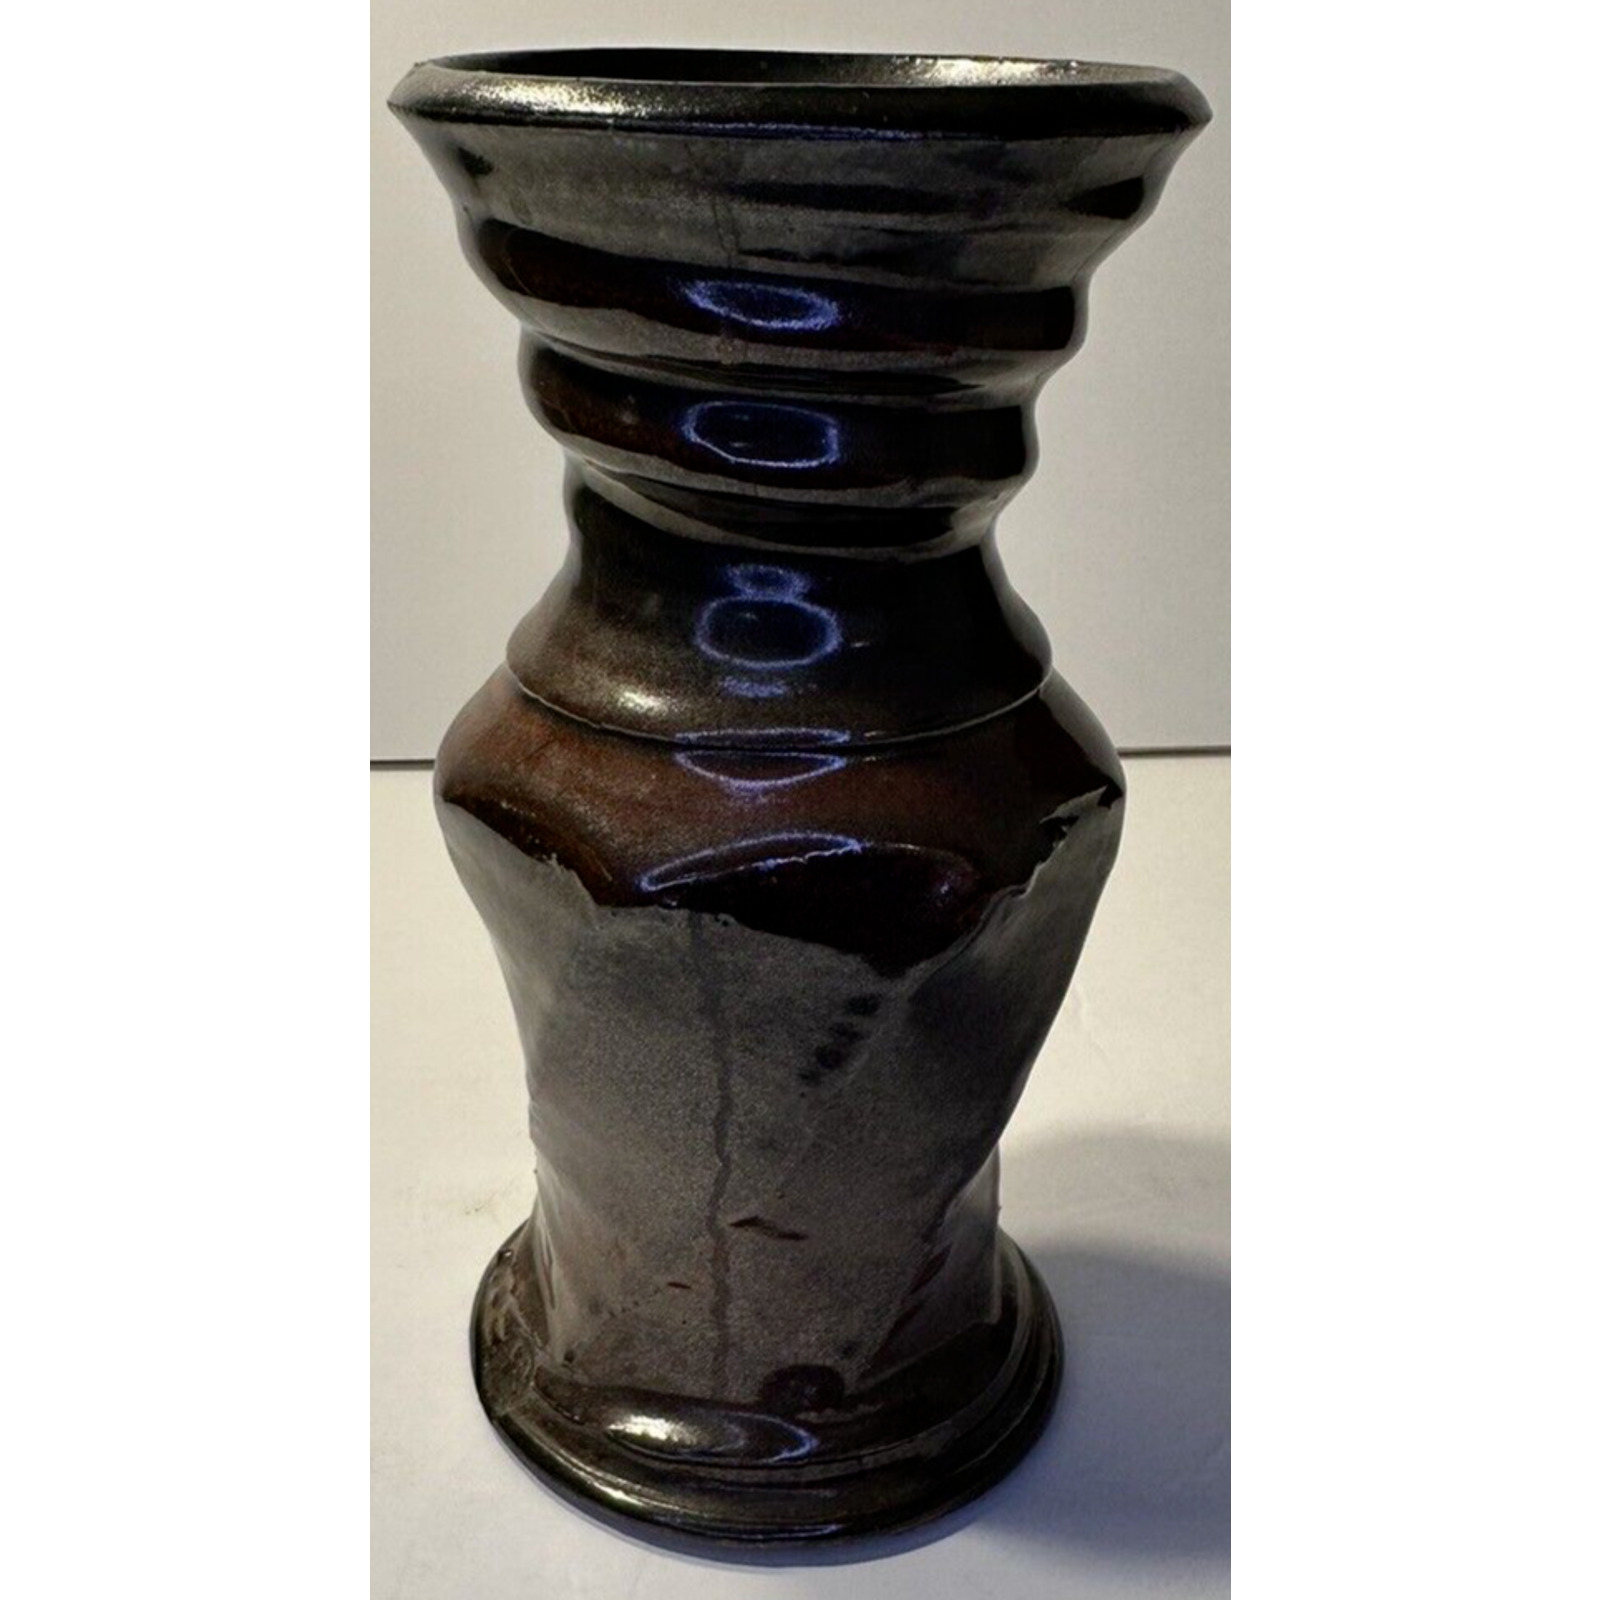 Decorative Ceramic Pottery Vase, Brownish/ Maroon Color, Medium Size